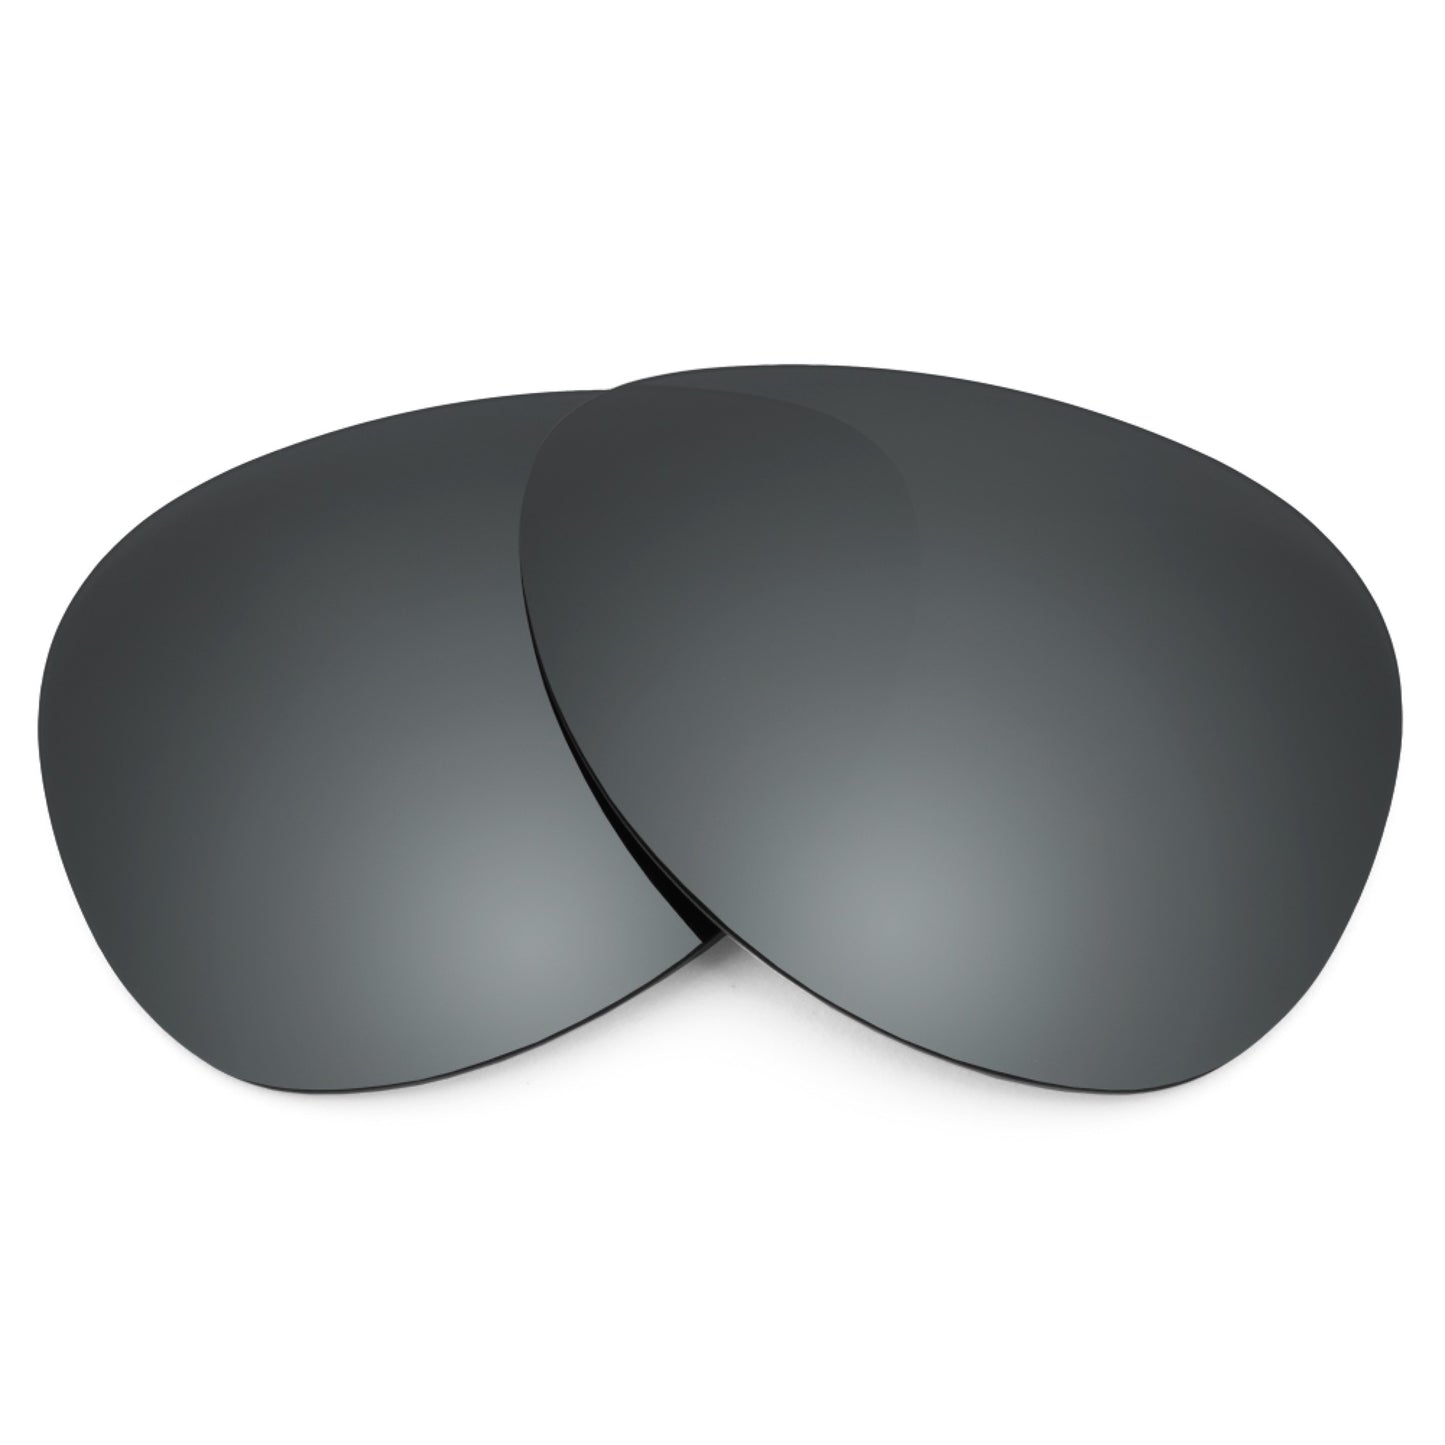 Revant replacement lenses for Ray-Ban Vagabond RB4152 53mm Non-Polarized Black Chrome